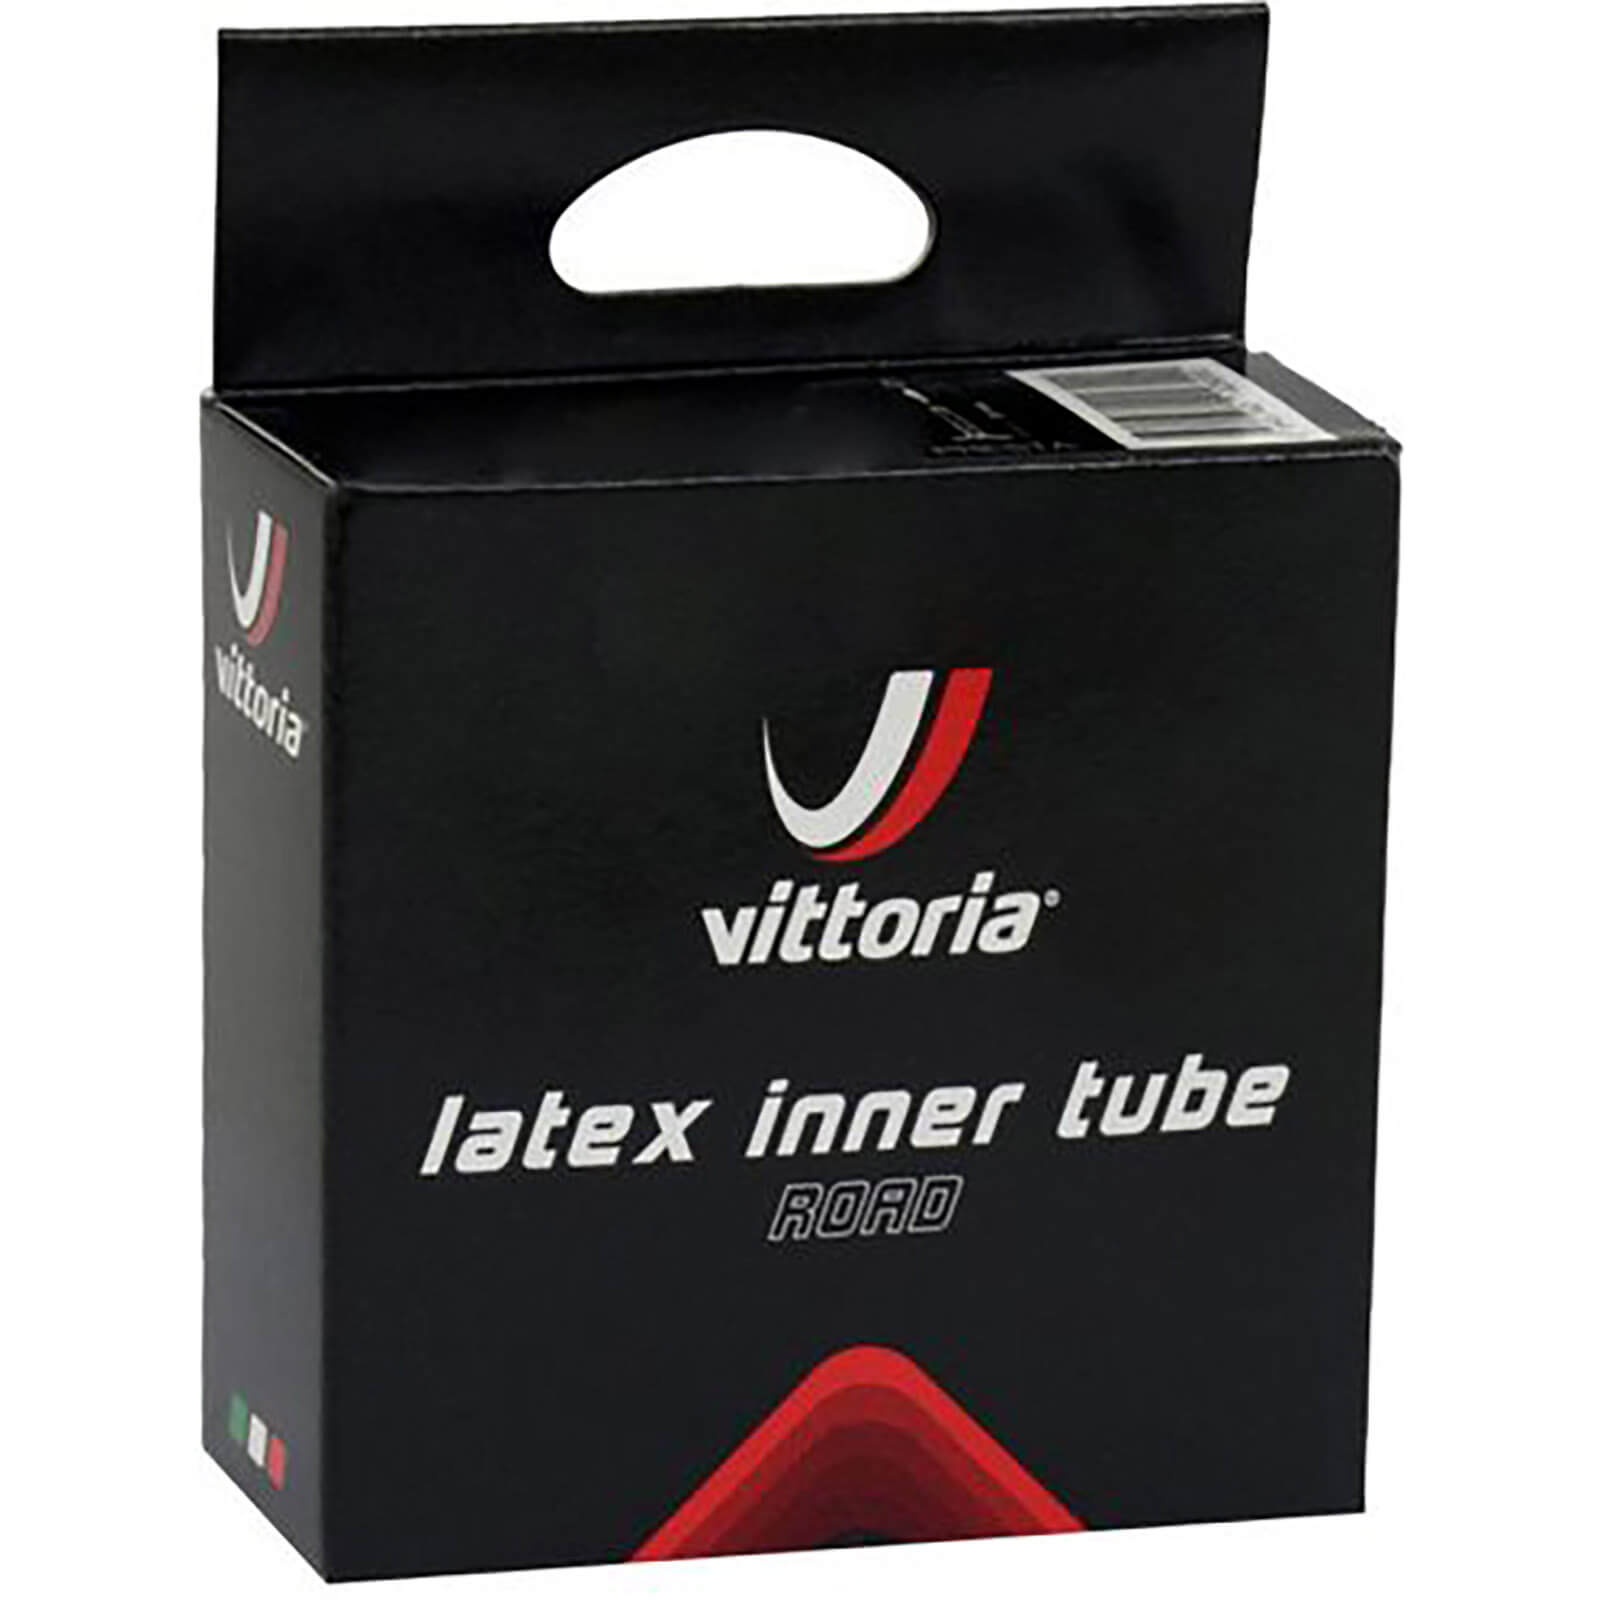 Vittoria Competition Latex Innertube - 700x30/38mm - 48mm